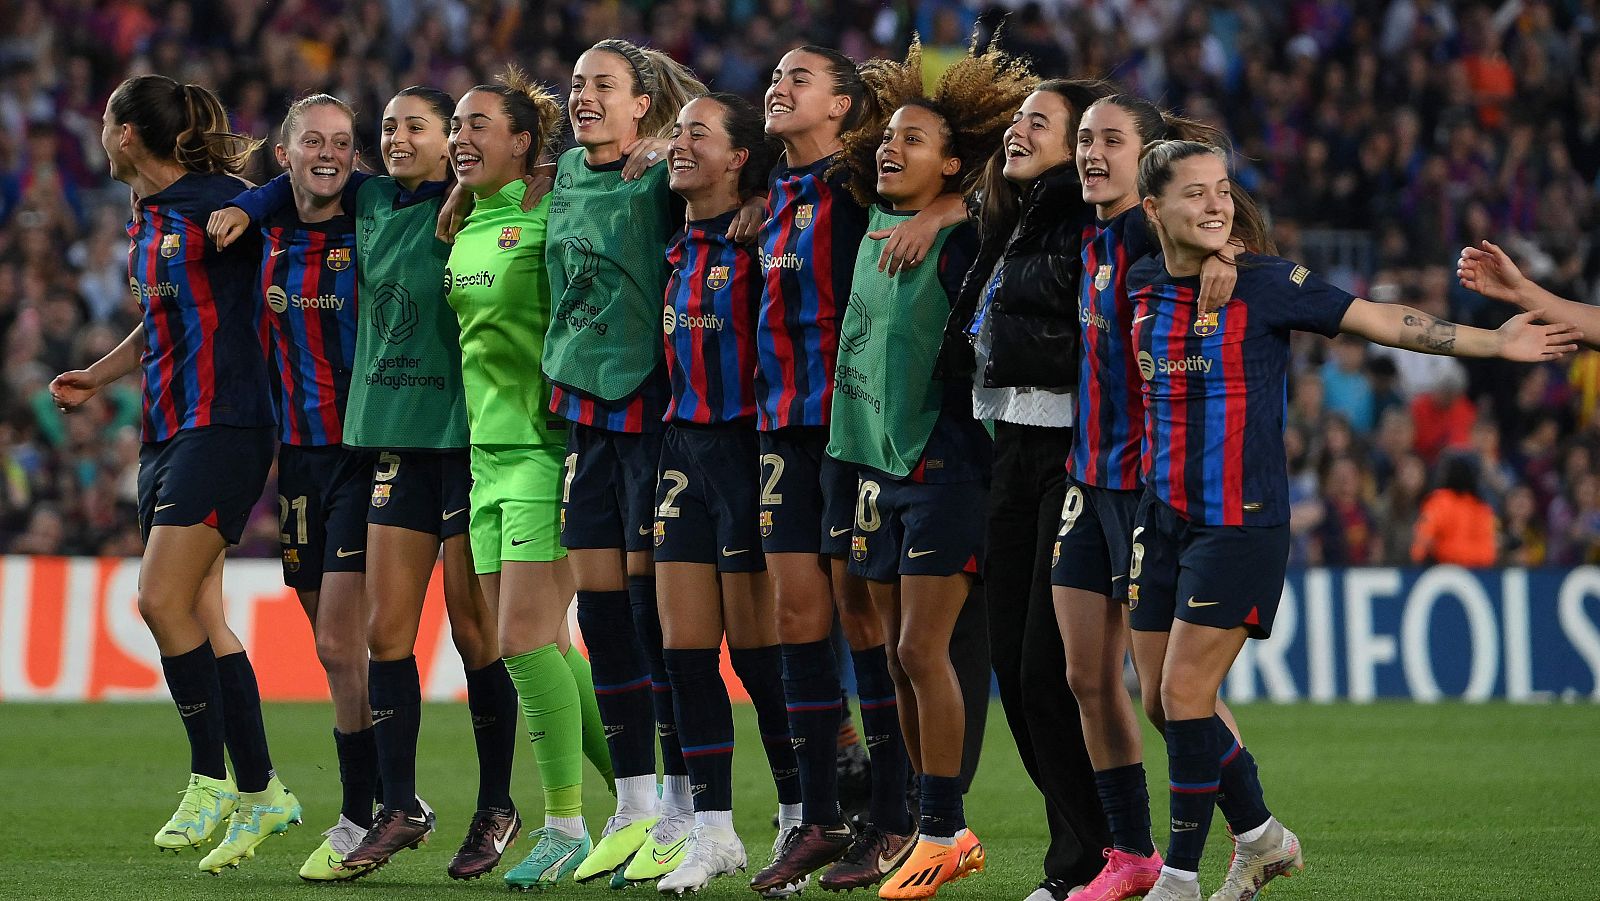 Champions femenina | Resumen del Barcelona - Chelsea